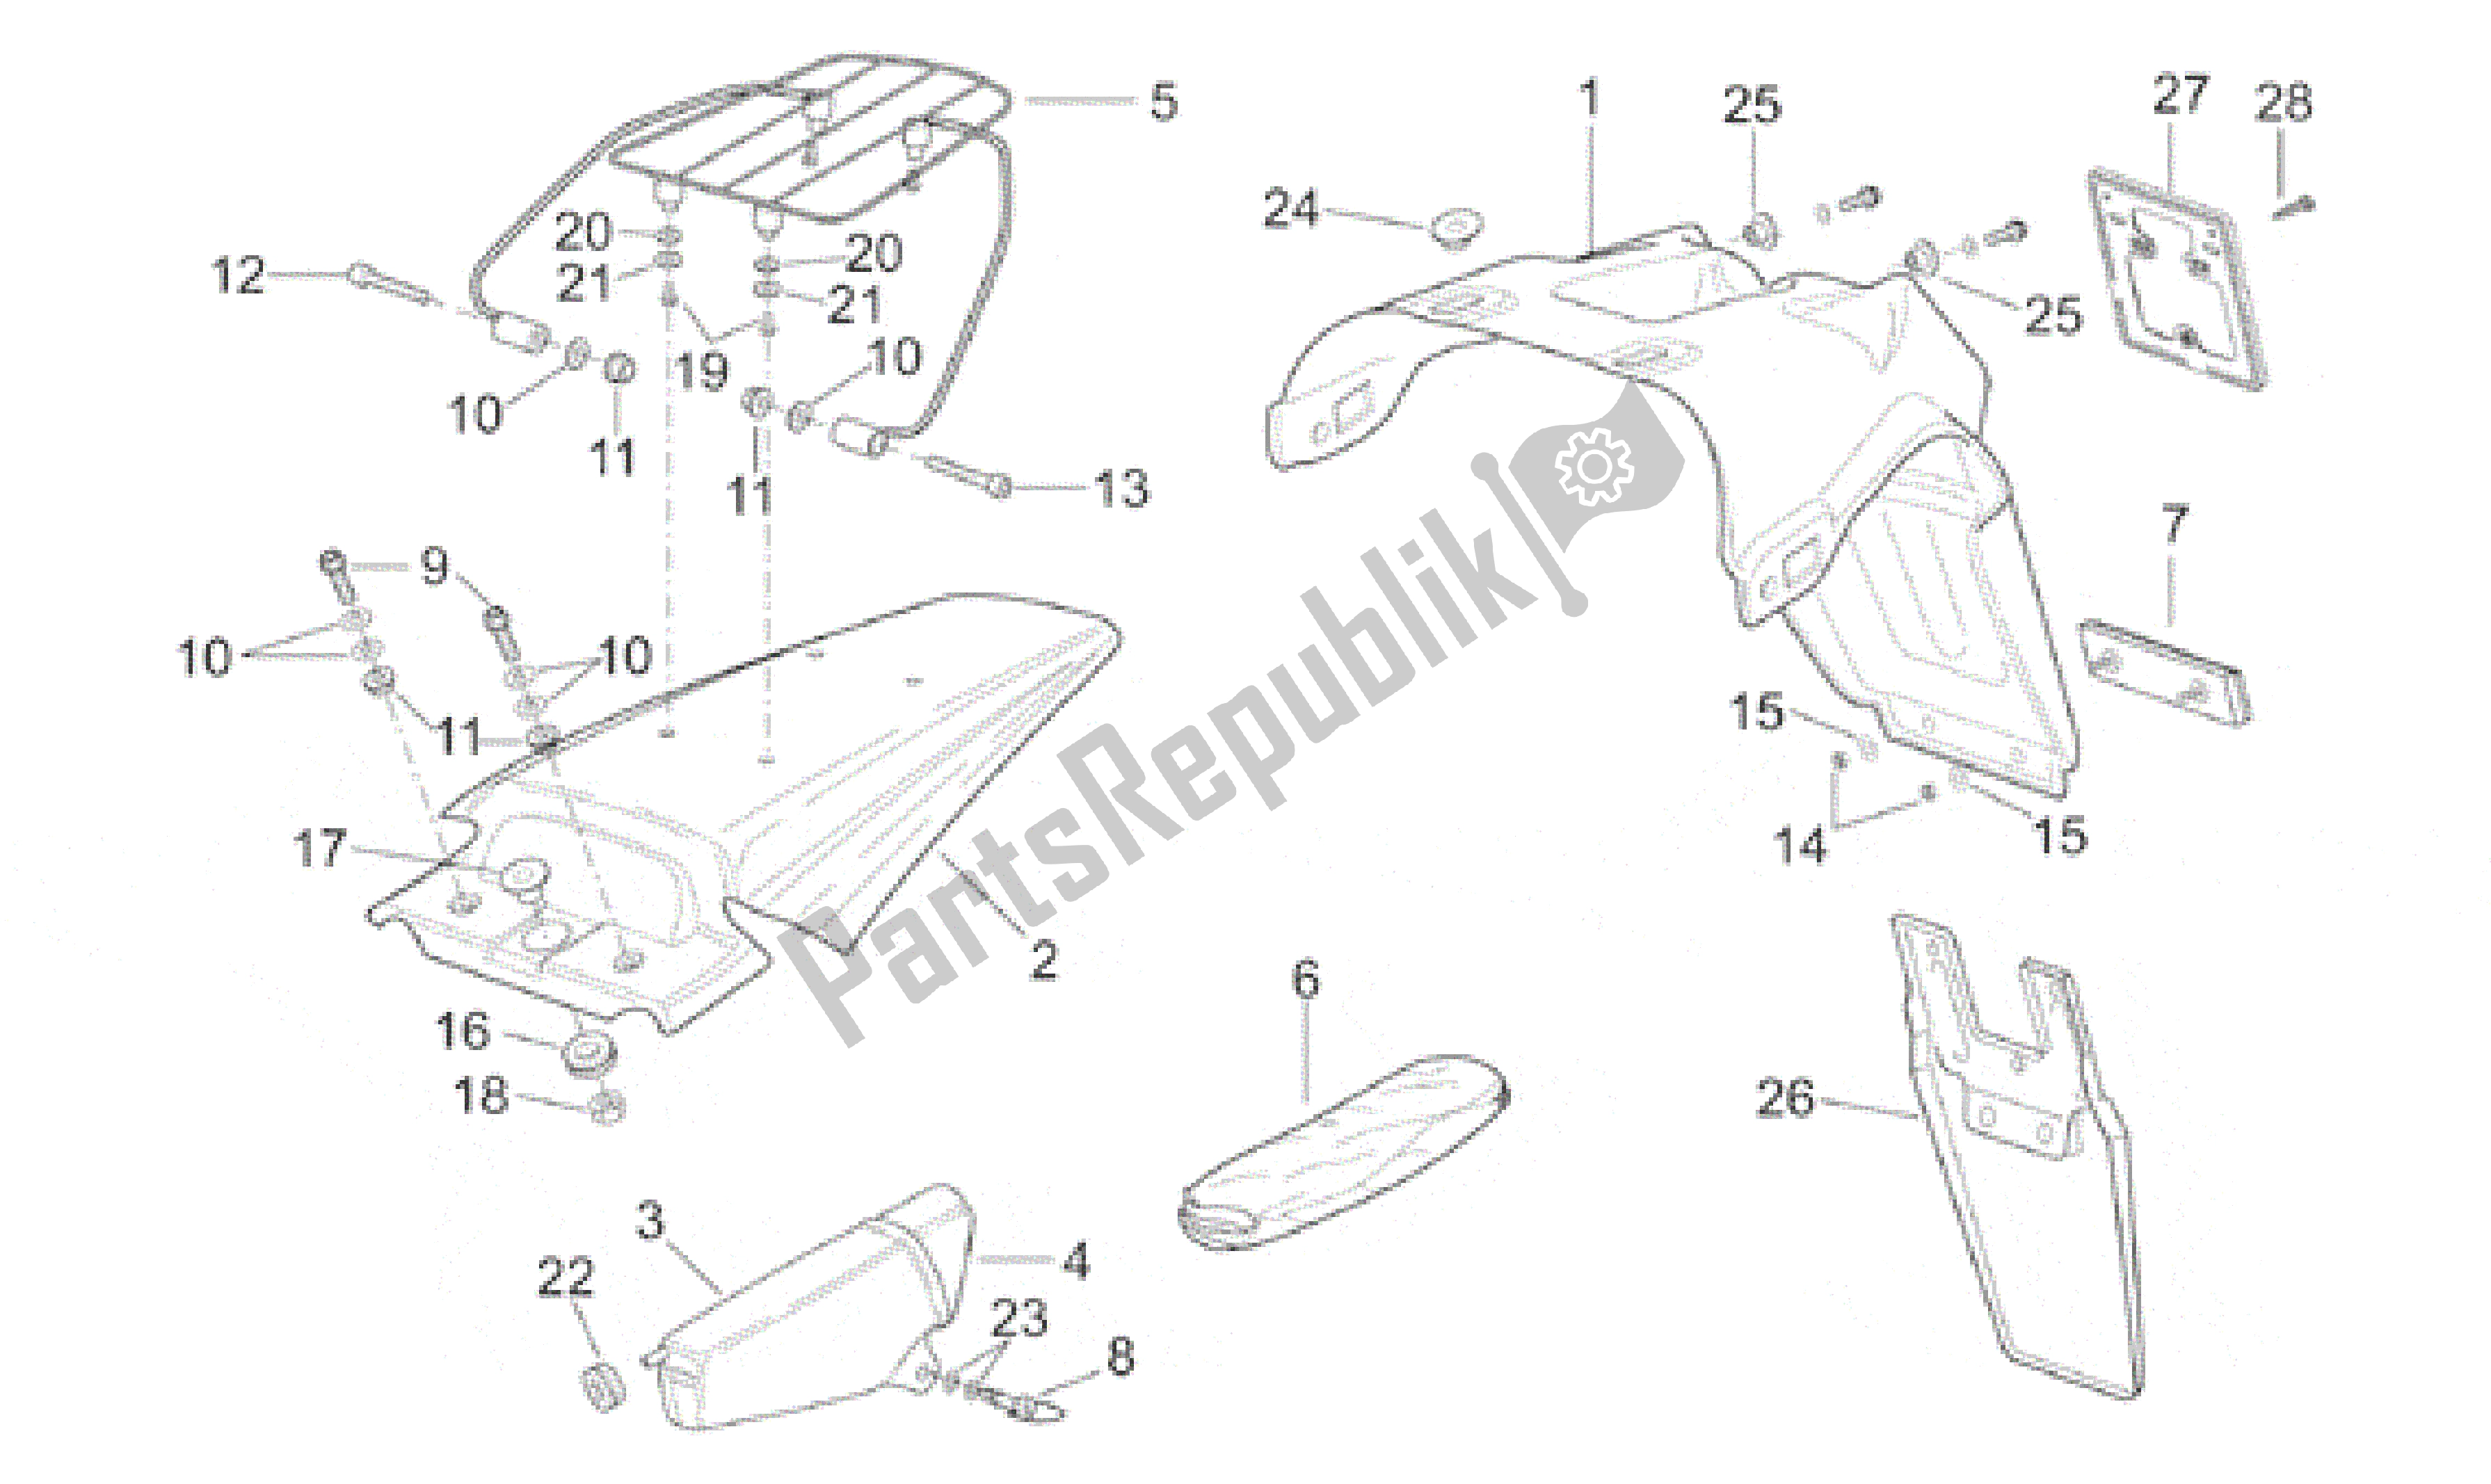 All parts for the Rear Body of the Aprilia ETX 125 1999 - 2001